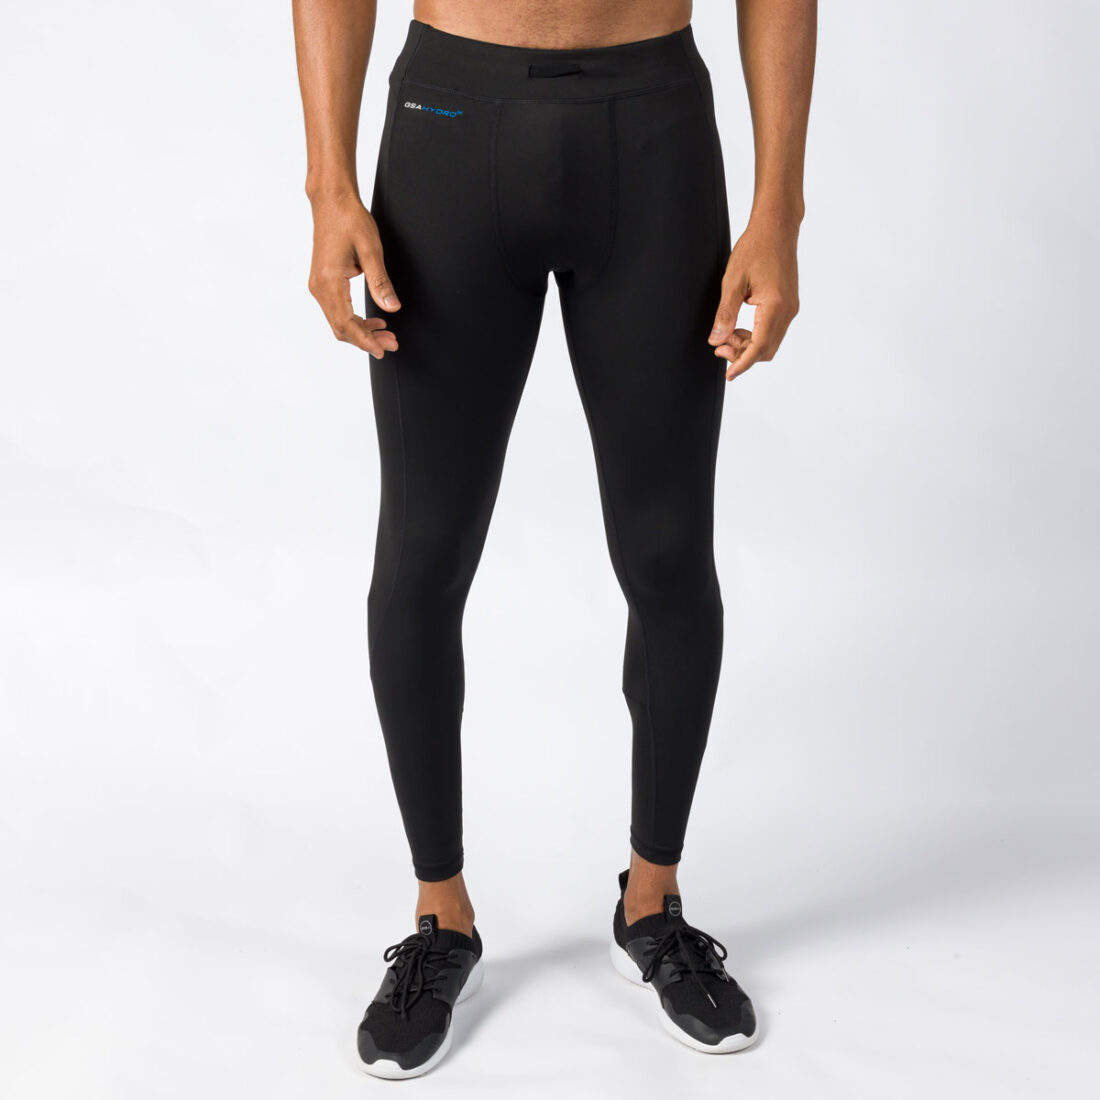 Nike Pro Three-Quarter Camo Legging - Men's 